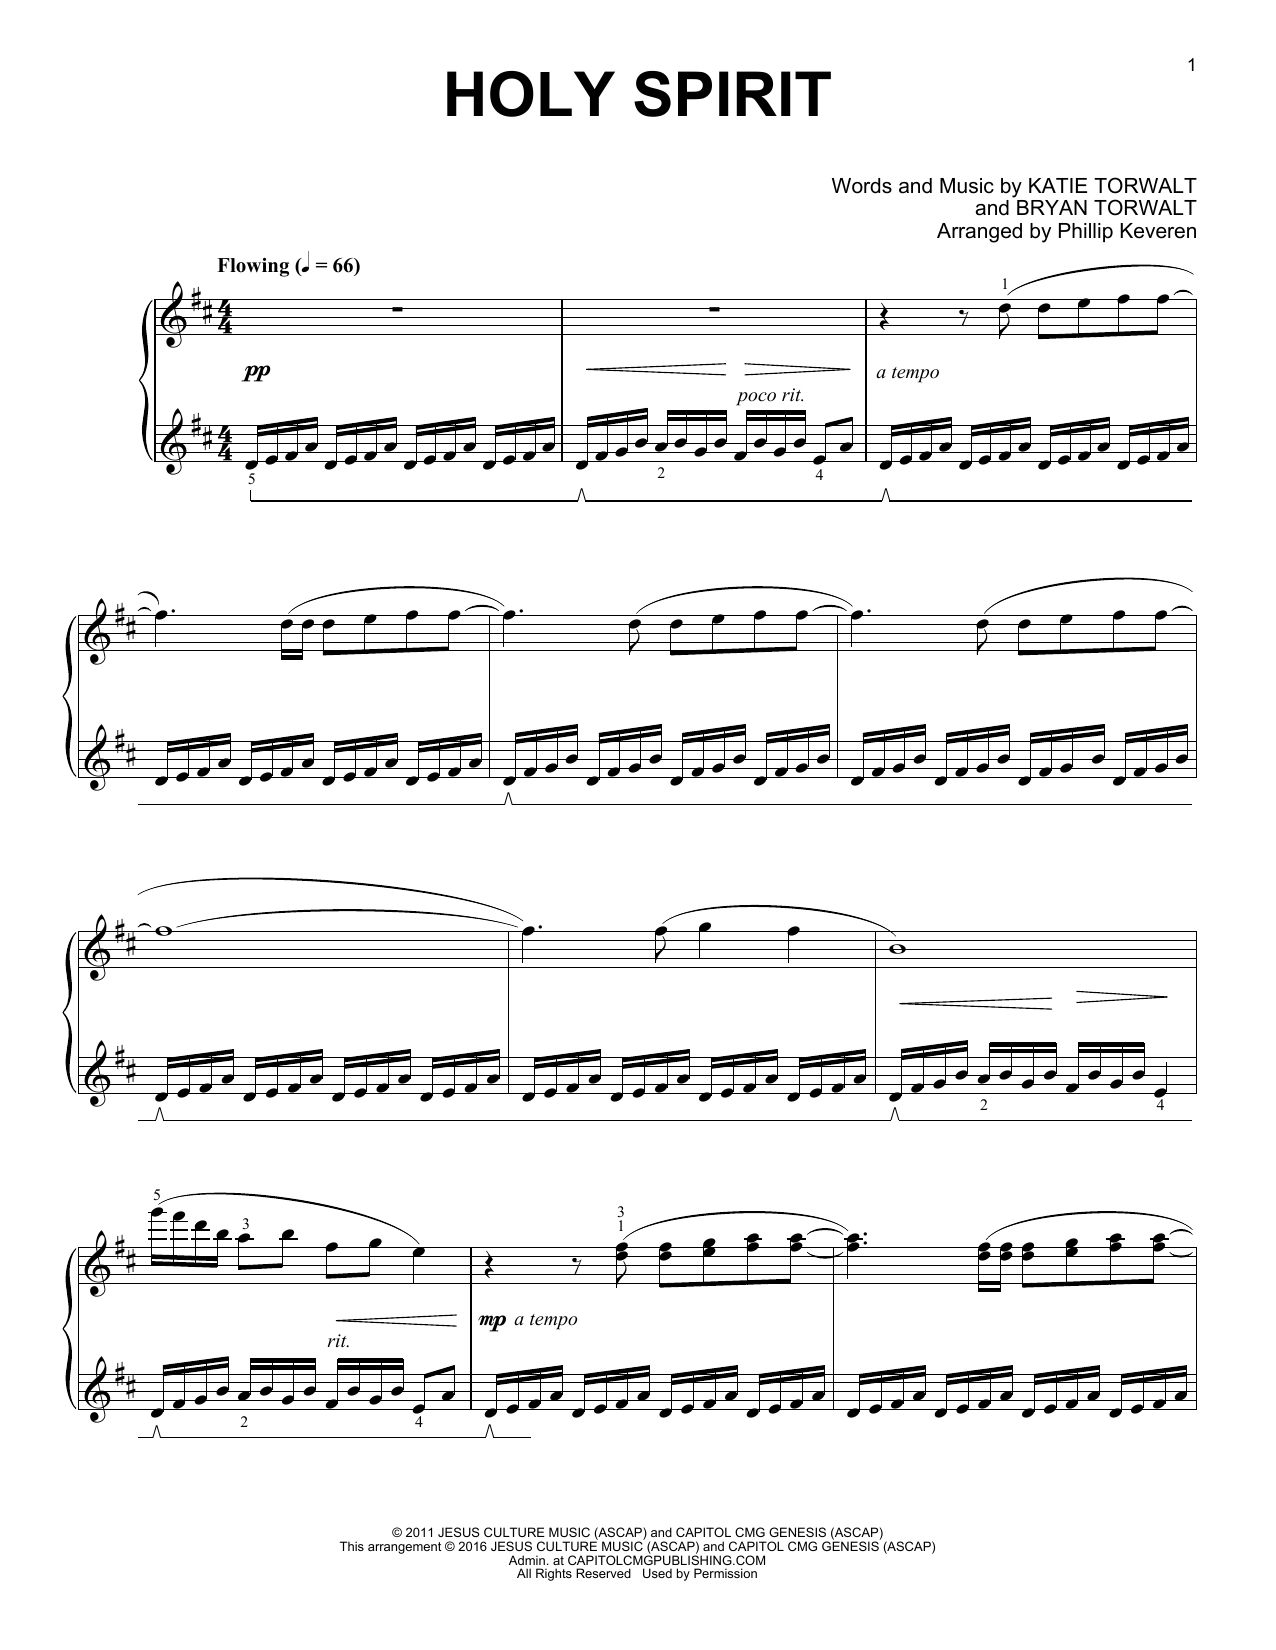 Bryan & Katie Torwalt Holy Spirit (arr. Phillip Keveren) Sheet Music Notes & Chords for Easy Piano - Download or Print PDF